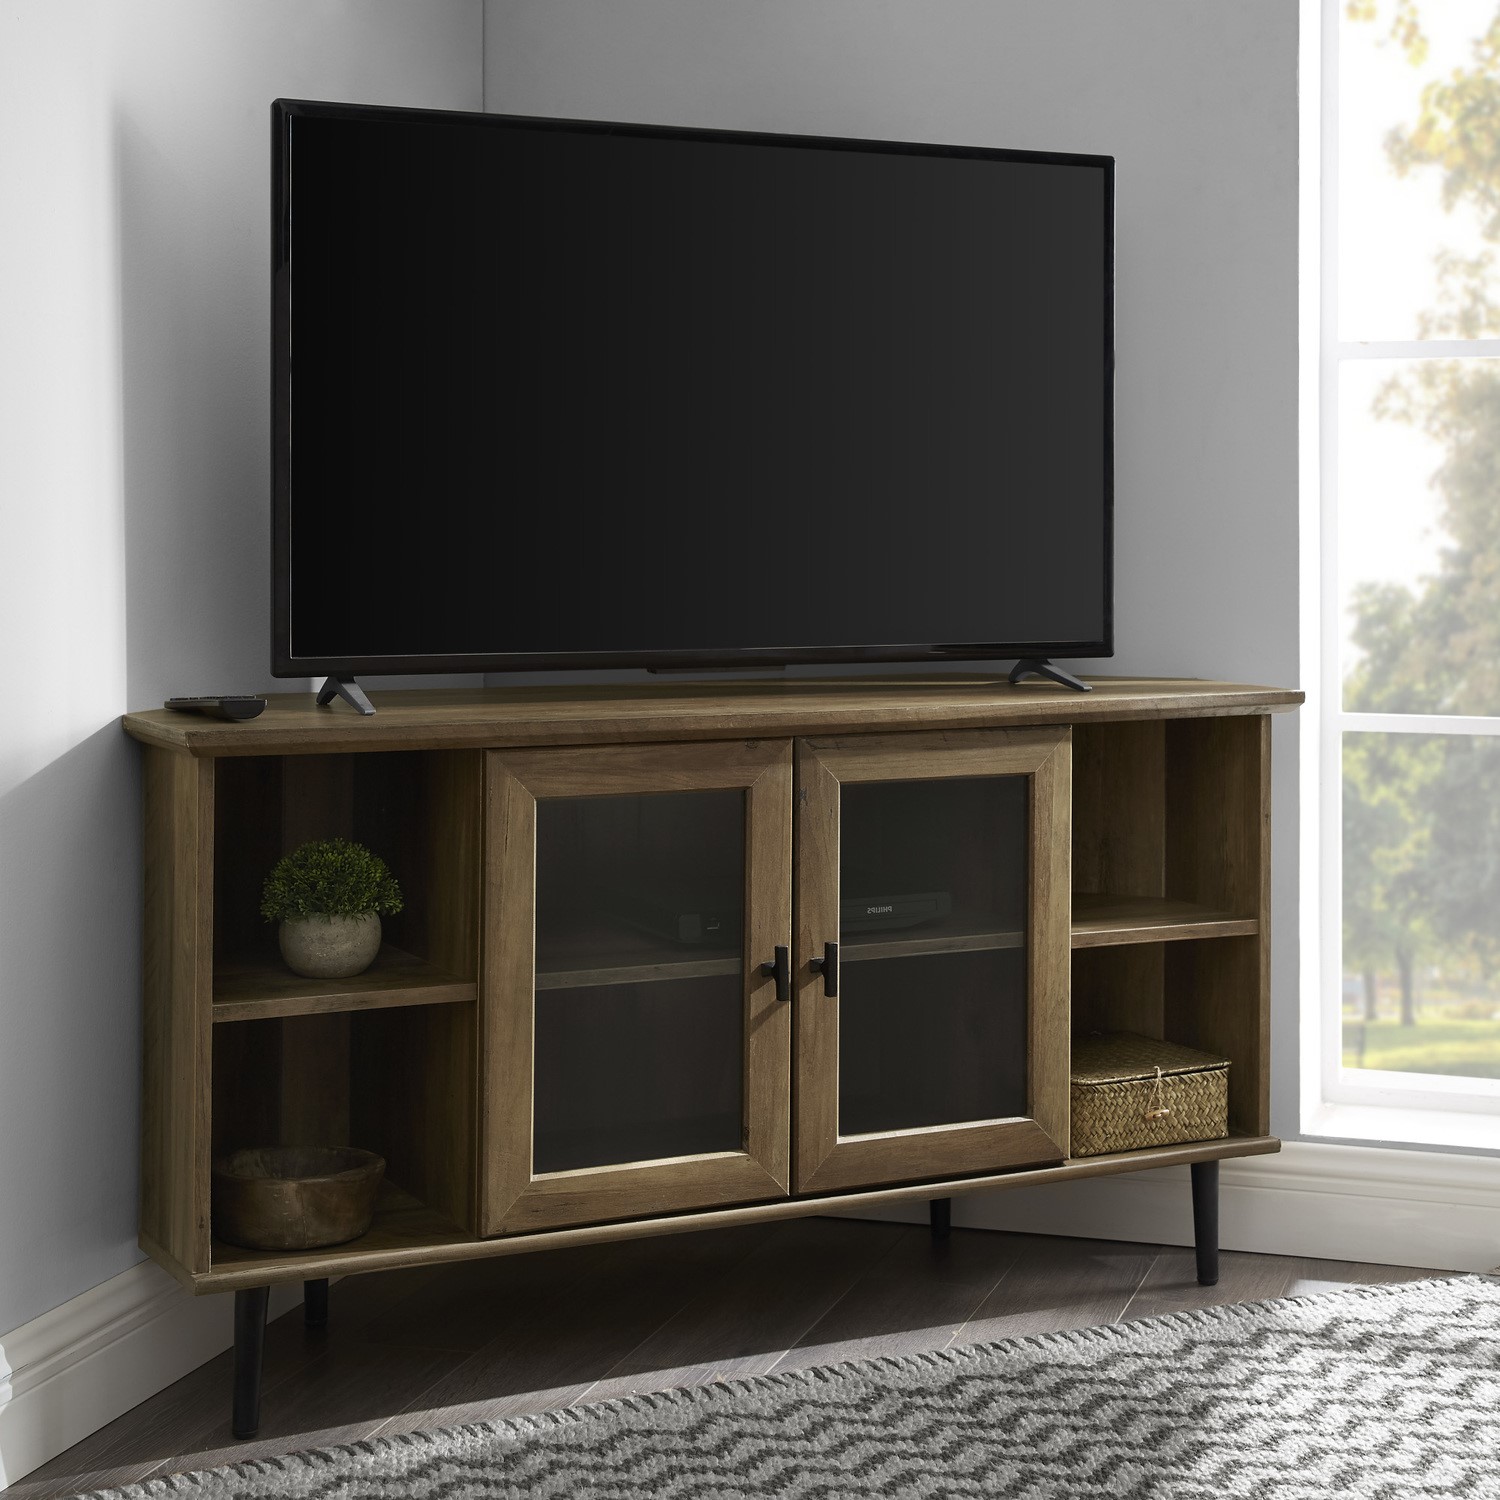 Oak Effect Corner Tv Unit With Storage - Tvs Up To 52